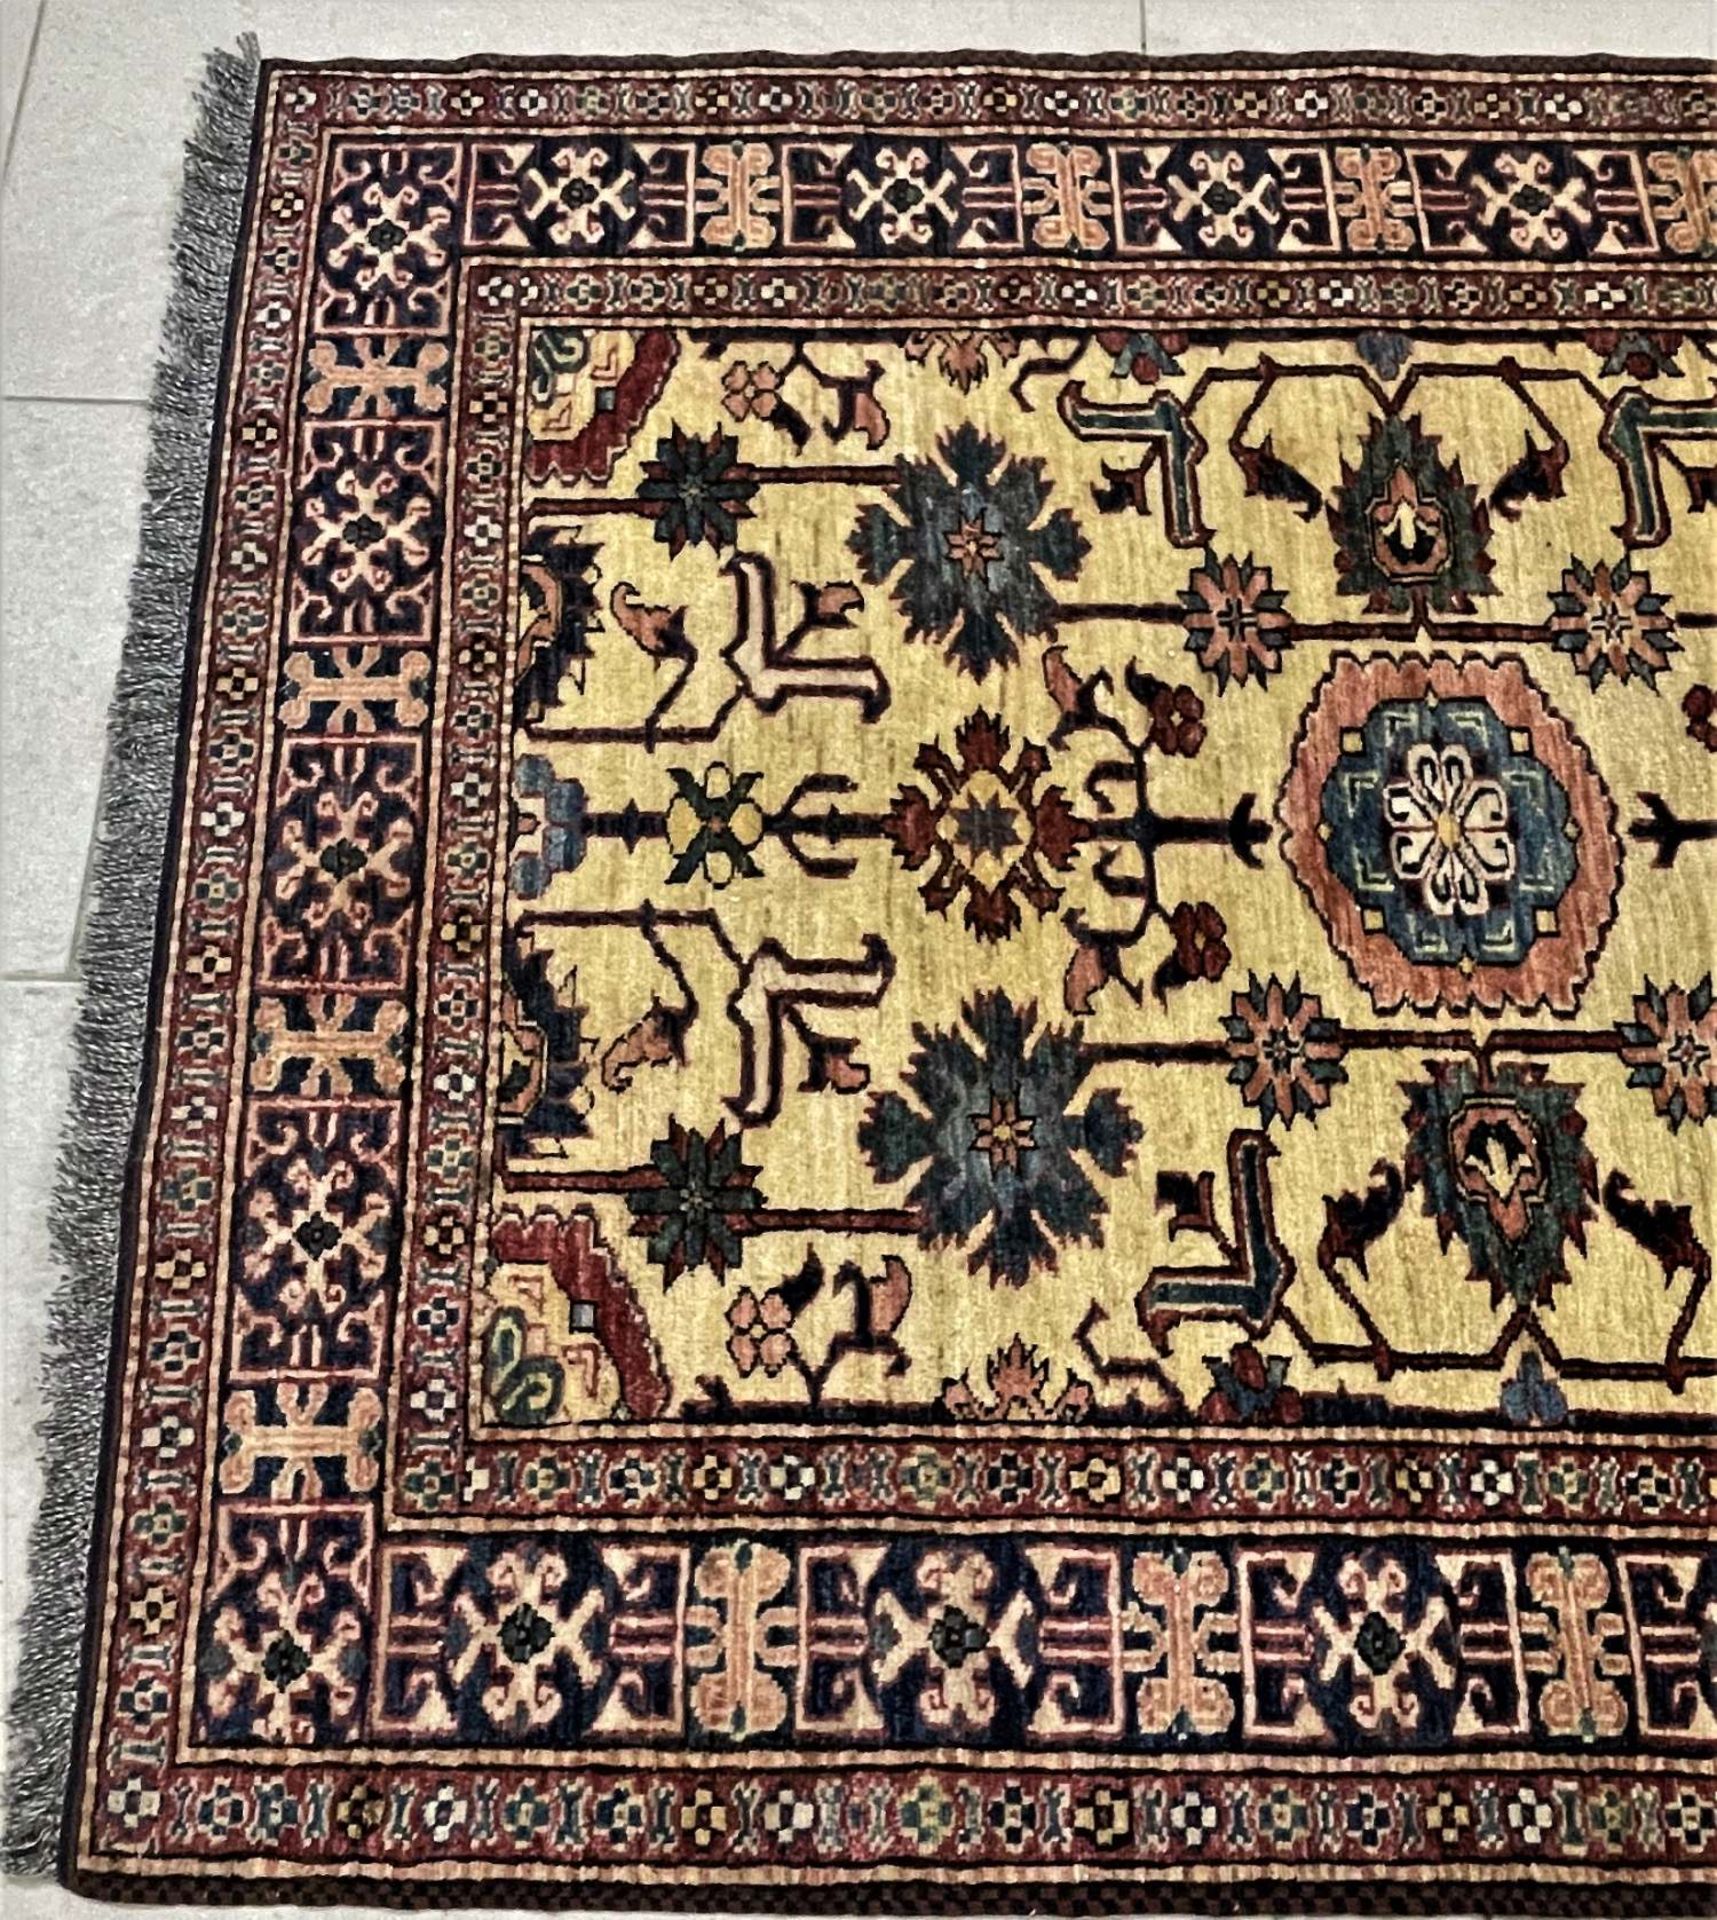 Oriental rug from Pakistan "Afghan Kazzak" - 161 x 121 cm - Image 2 of 7